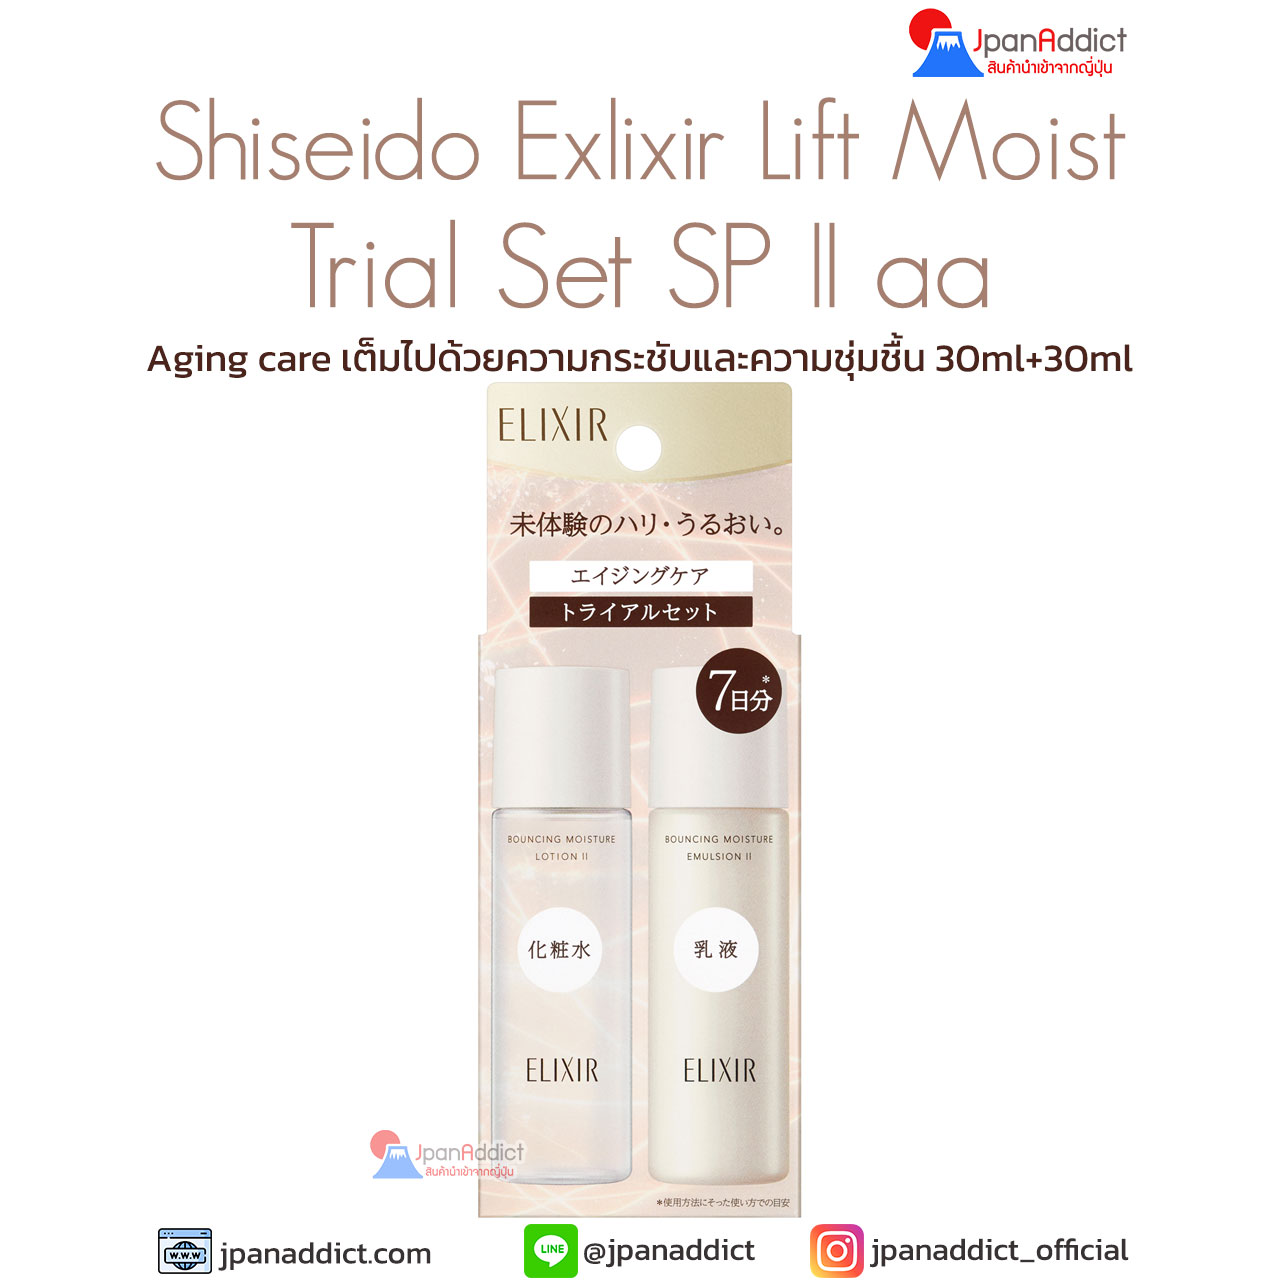 Shiseido Exlixir Lift Moist Trial Set SP II aa 30ml+30ml Aging care